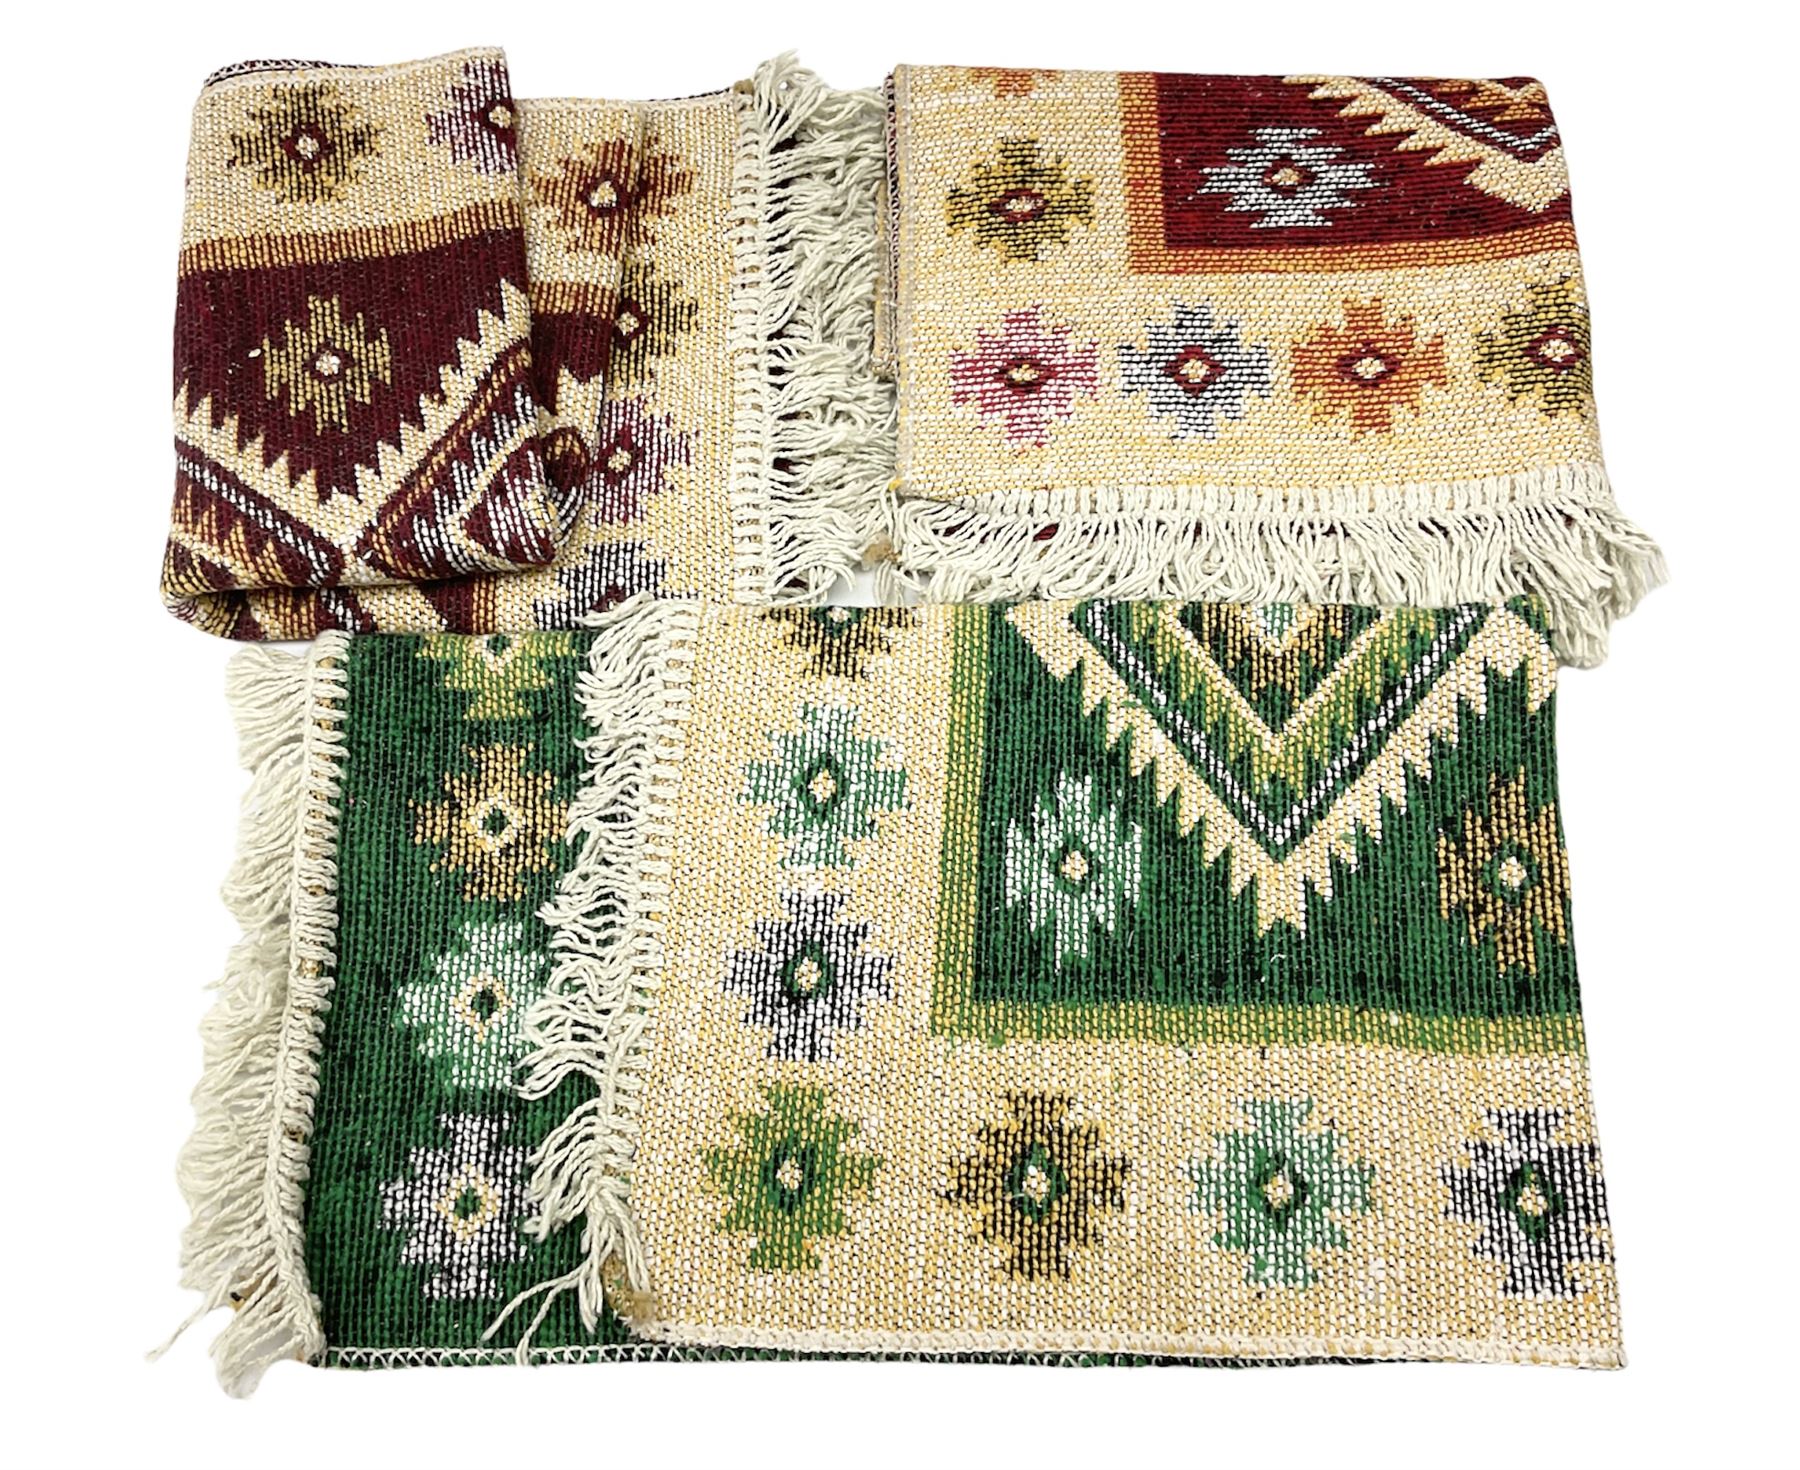 Three Turkish rugs decorated with geometric medallions and tasseled edges